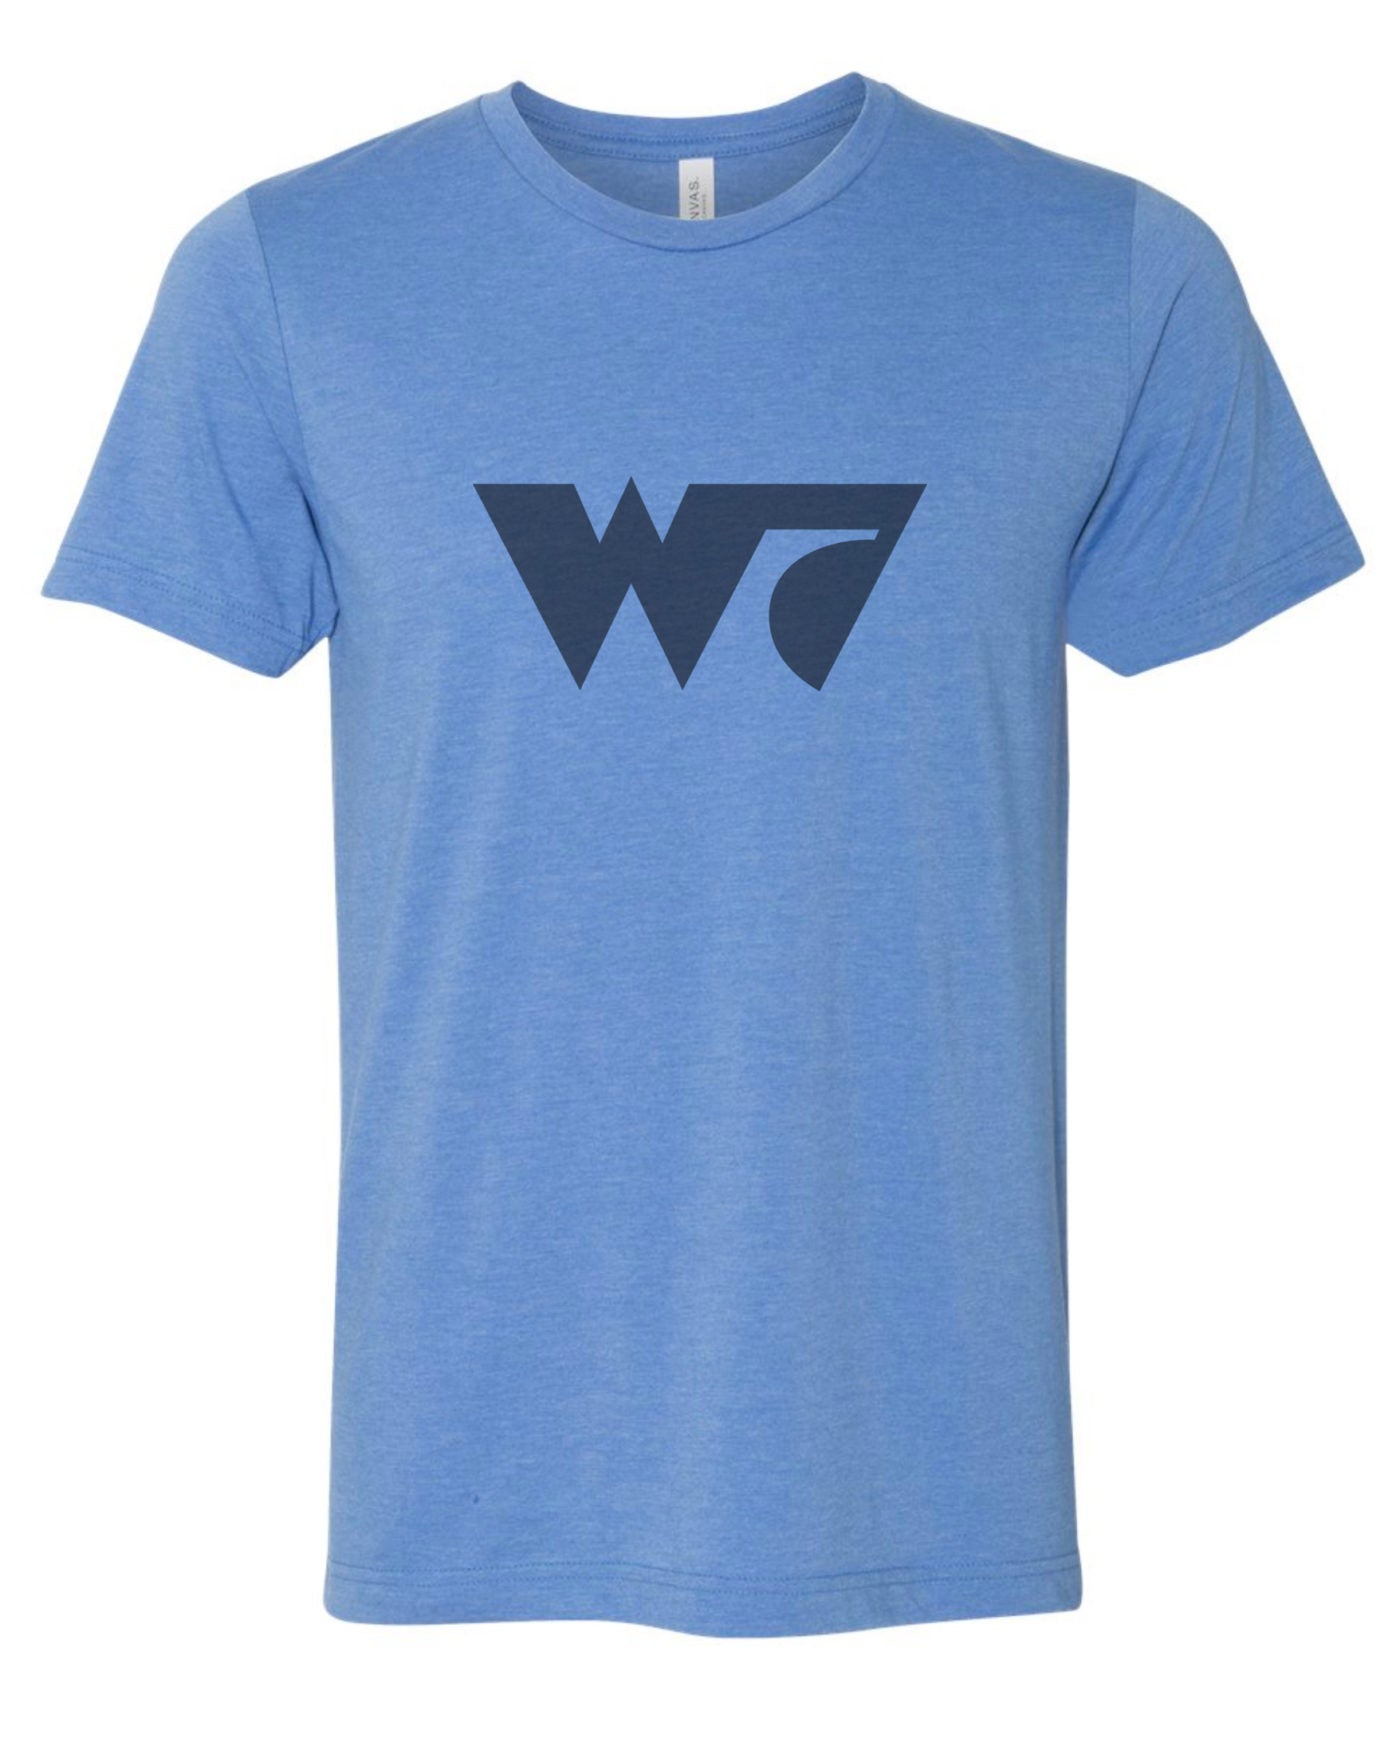 W7 T-shirt (Heather Columbia Blue)